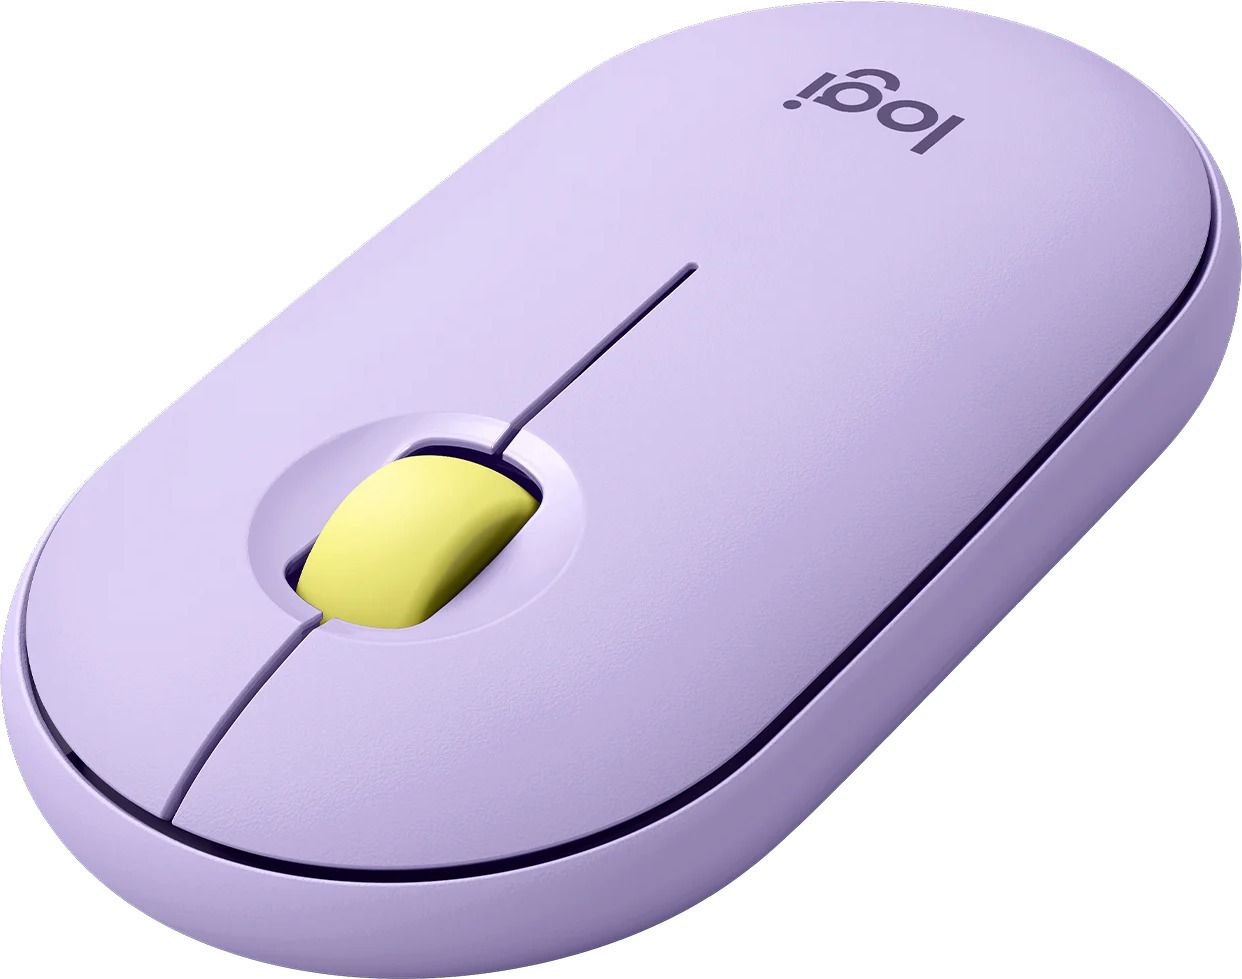 LOGITECH Pebble M350 Wireless Mouse - LAVENDER LEMONADE